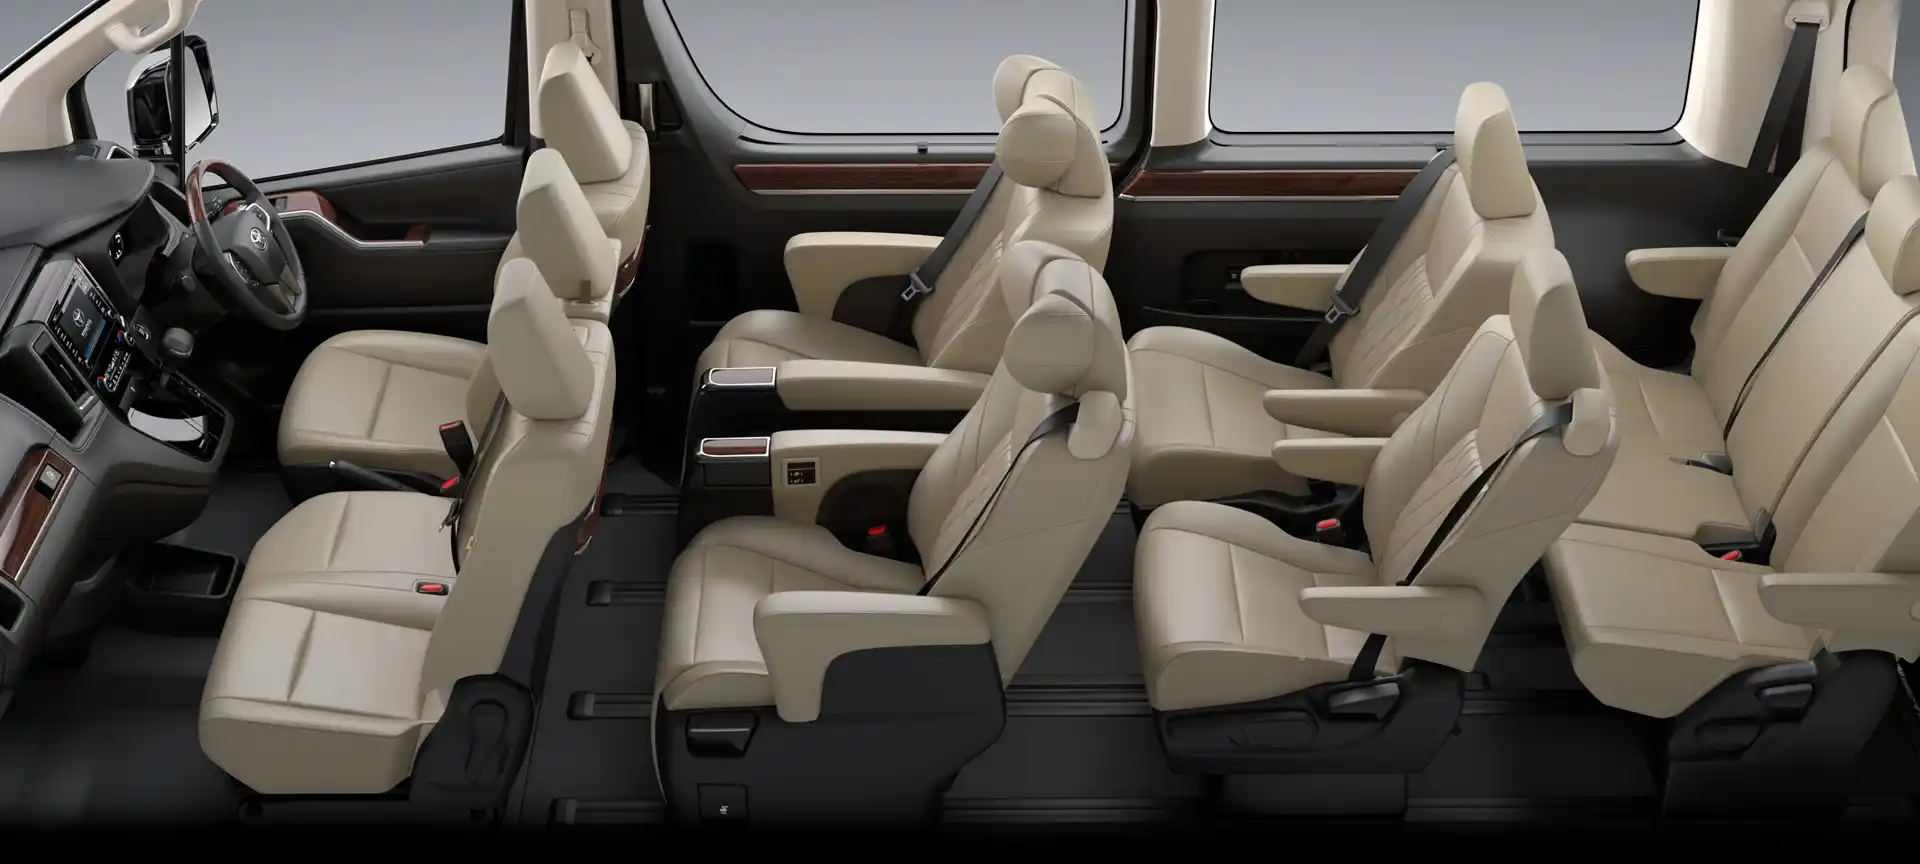 Toyota Hiace Luxury Wagon Seating Capacity